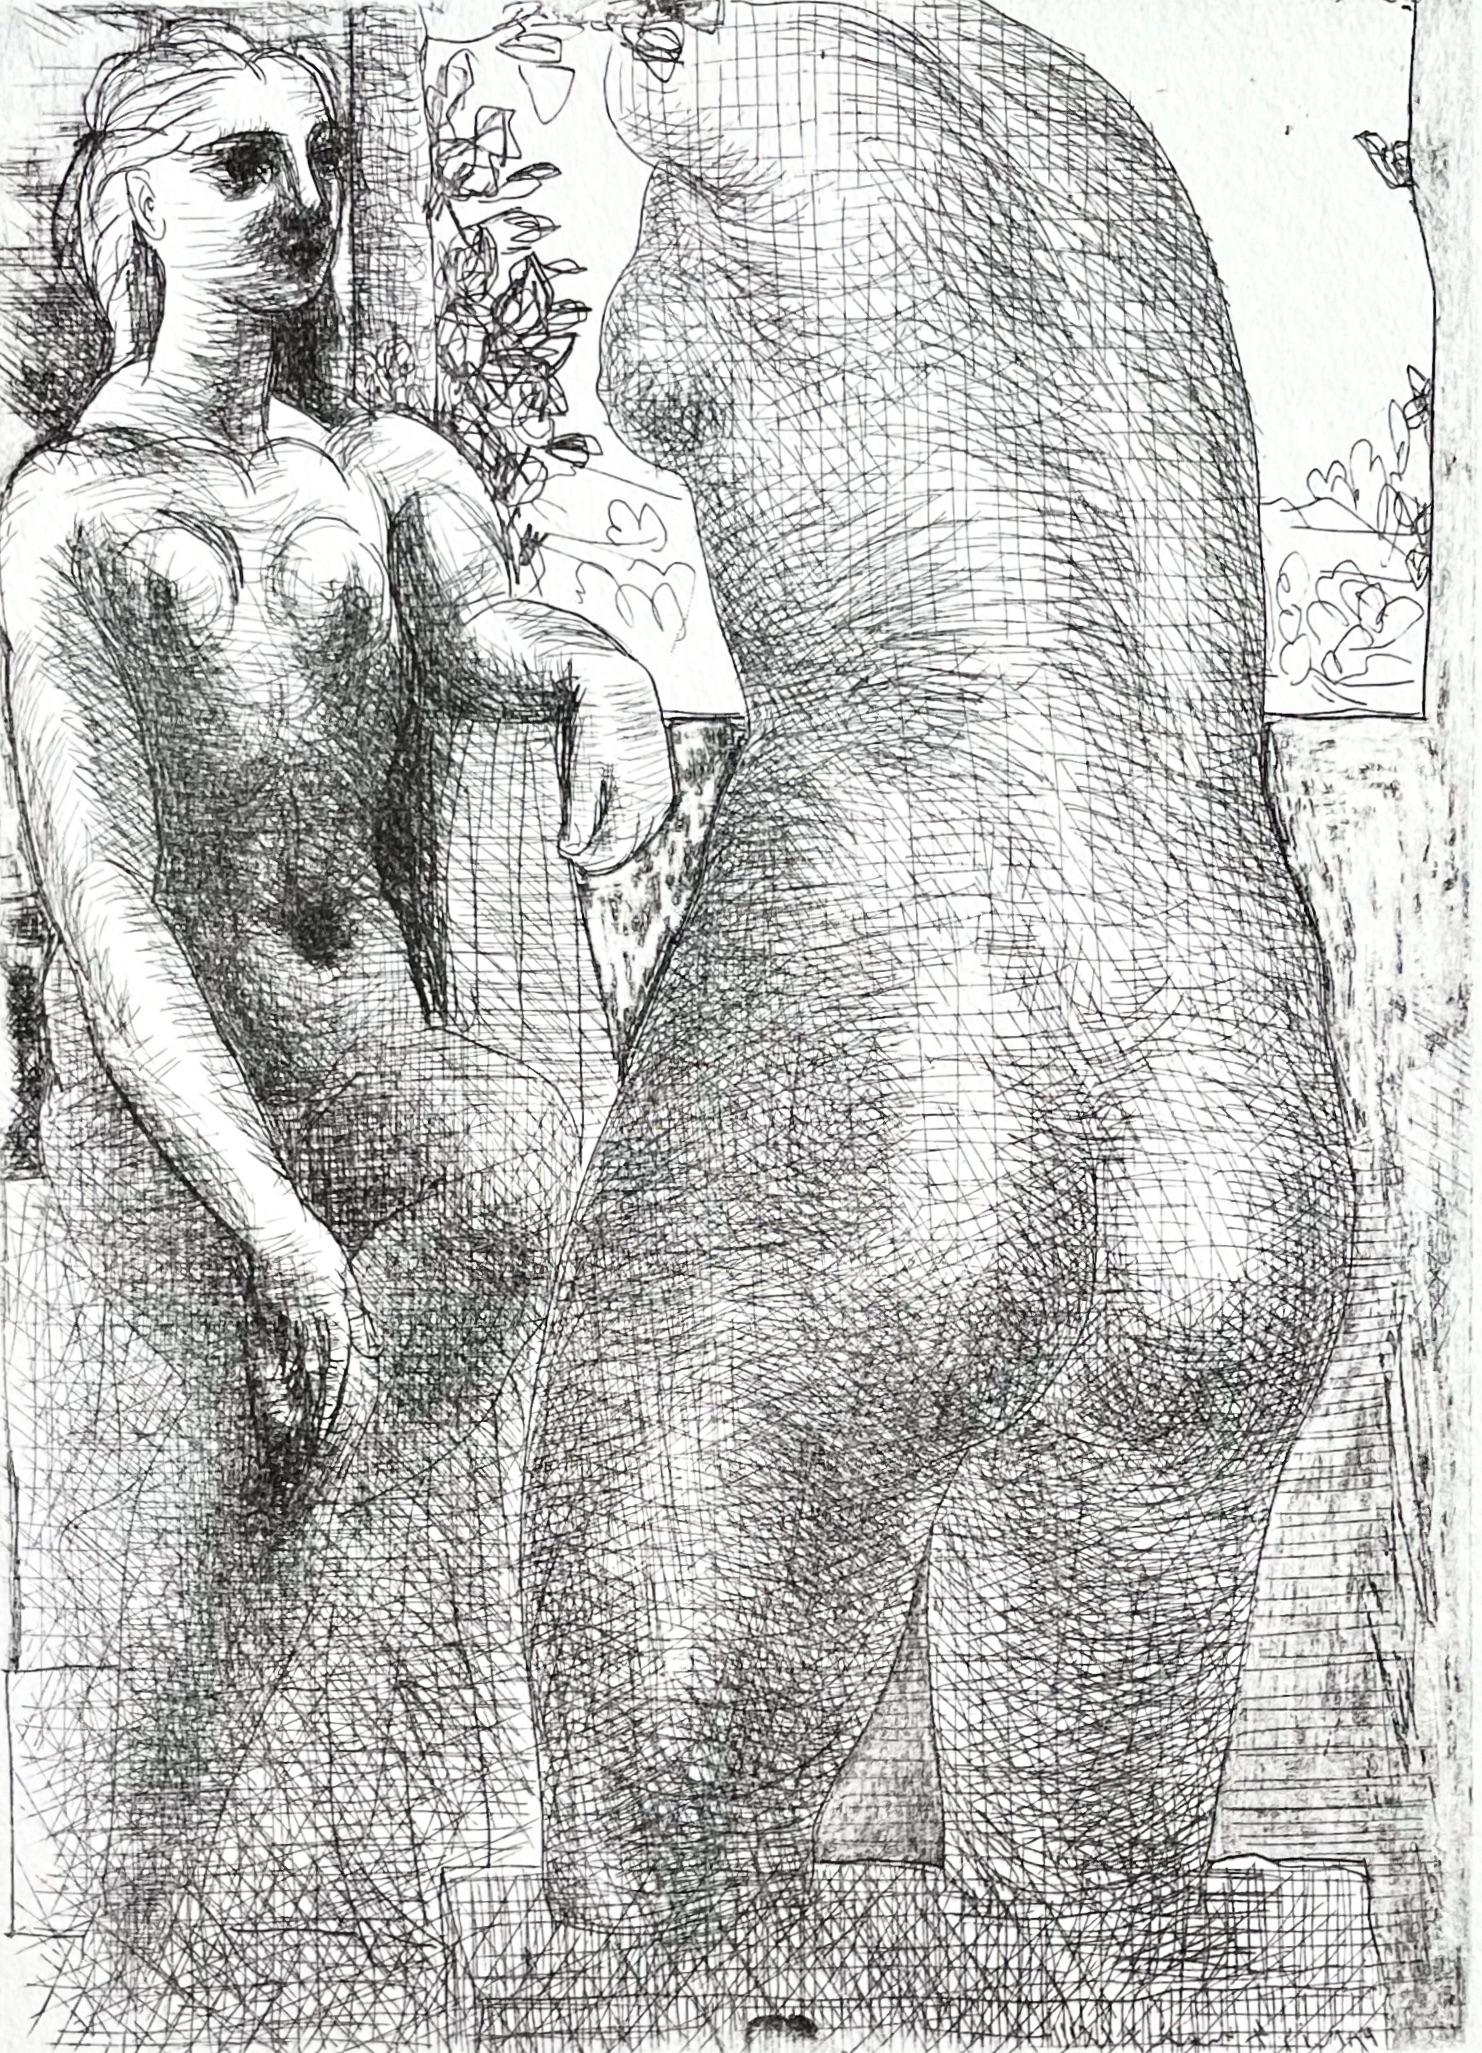 Pablo Picasso Nude Print - Picasso, Modele et Grande Sculpture de Dos (after)